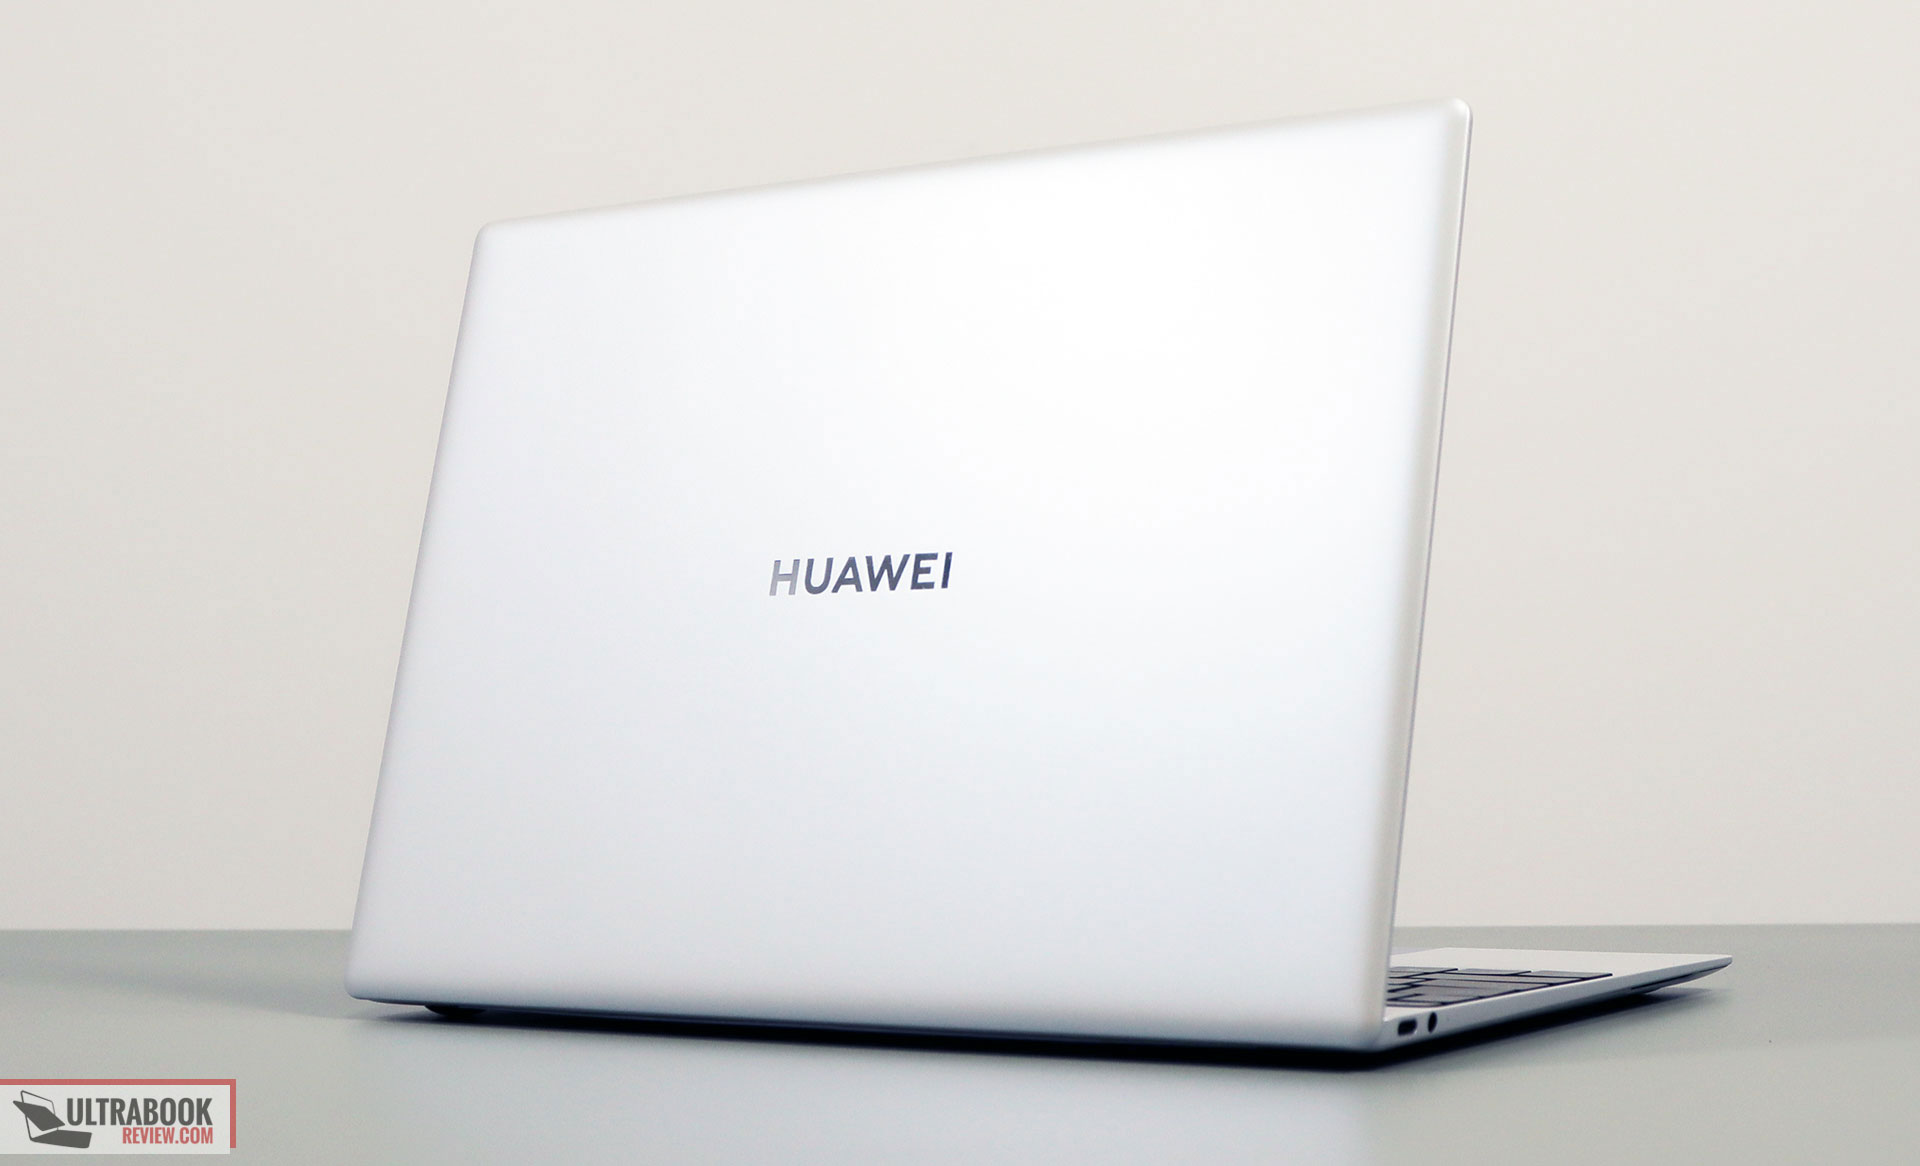 Huawei Matebook X review (fanless Intel Core, 3:2 display)